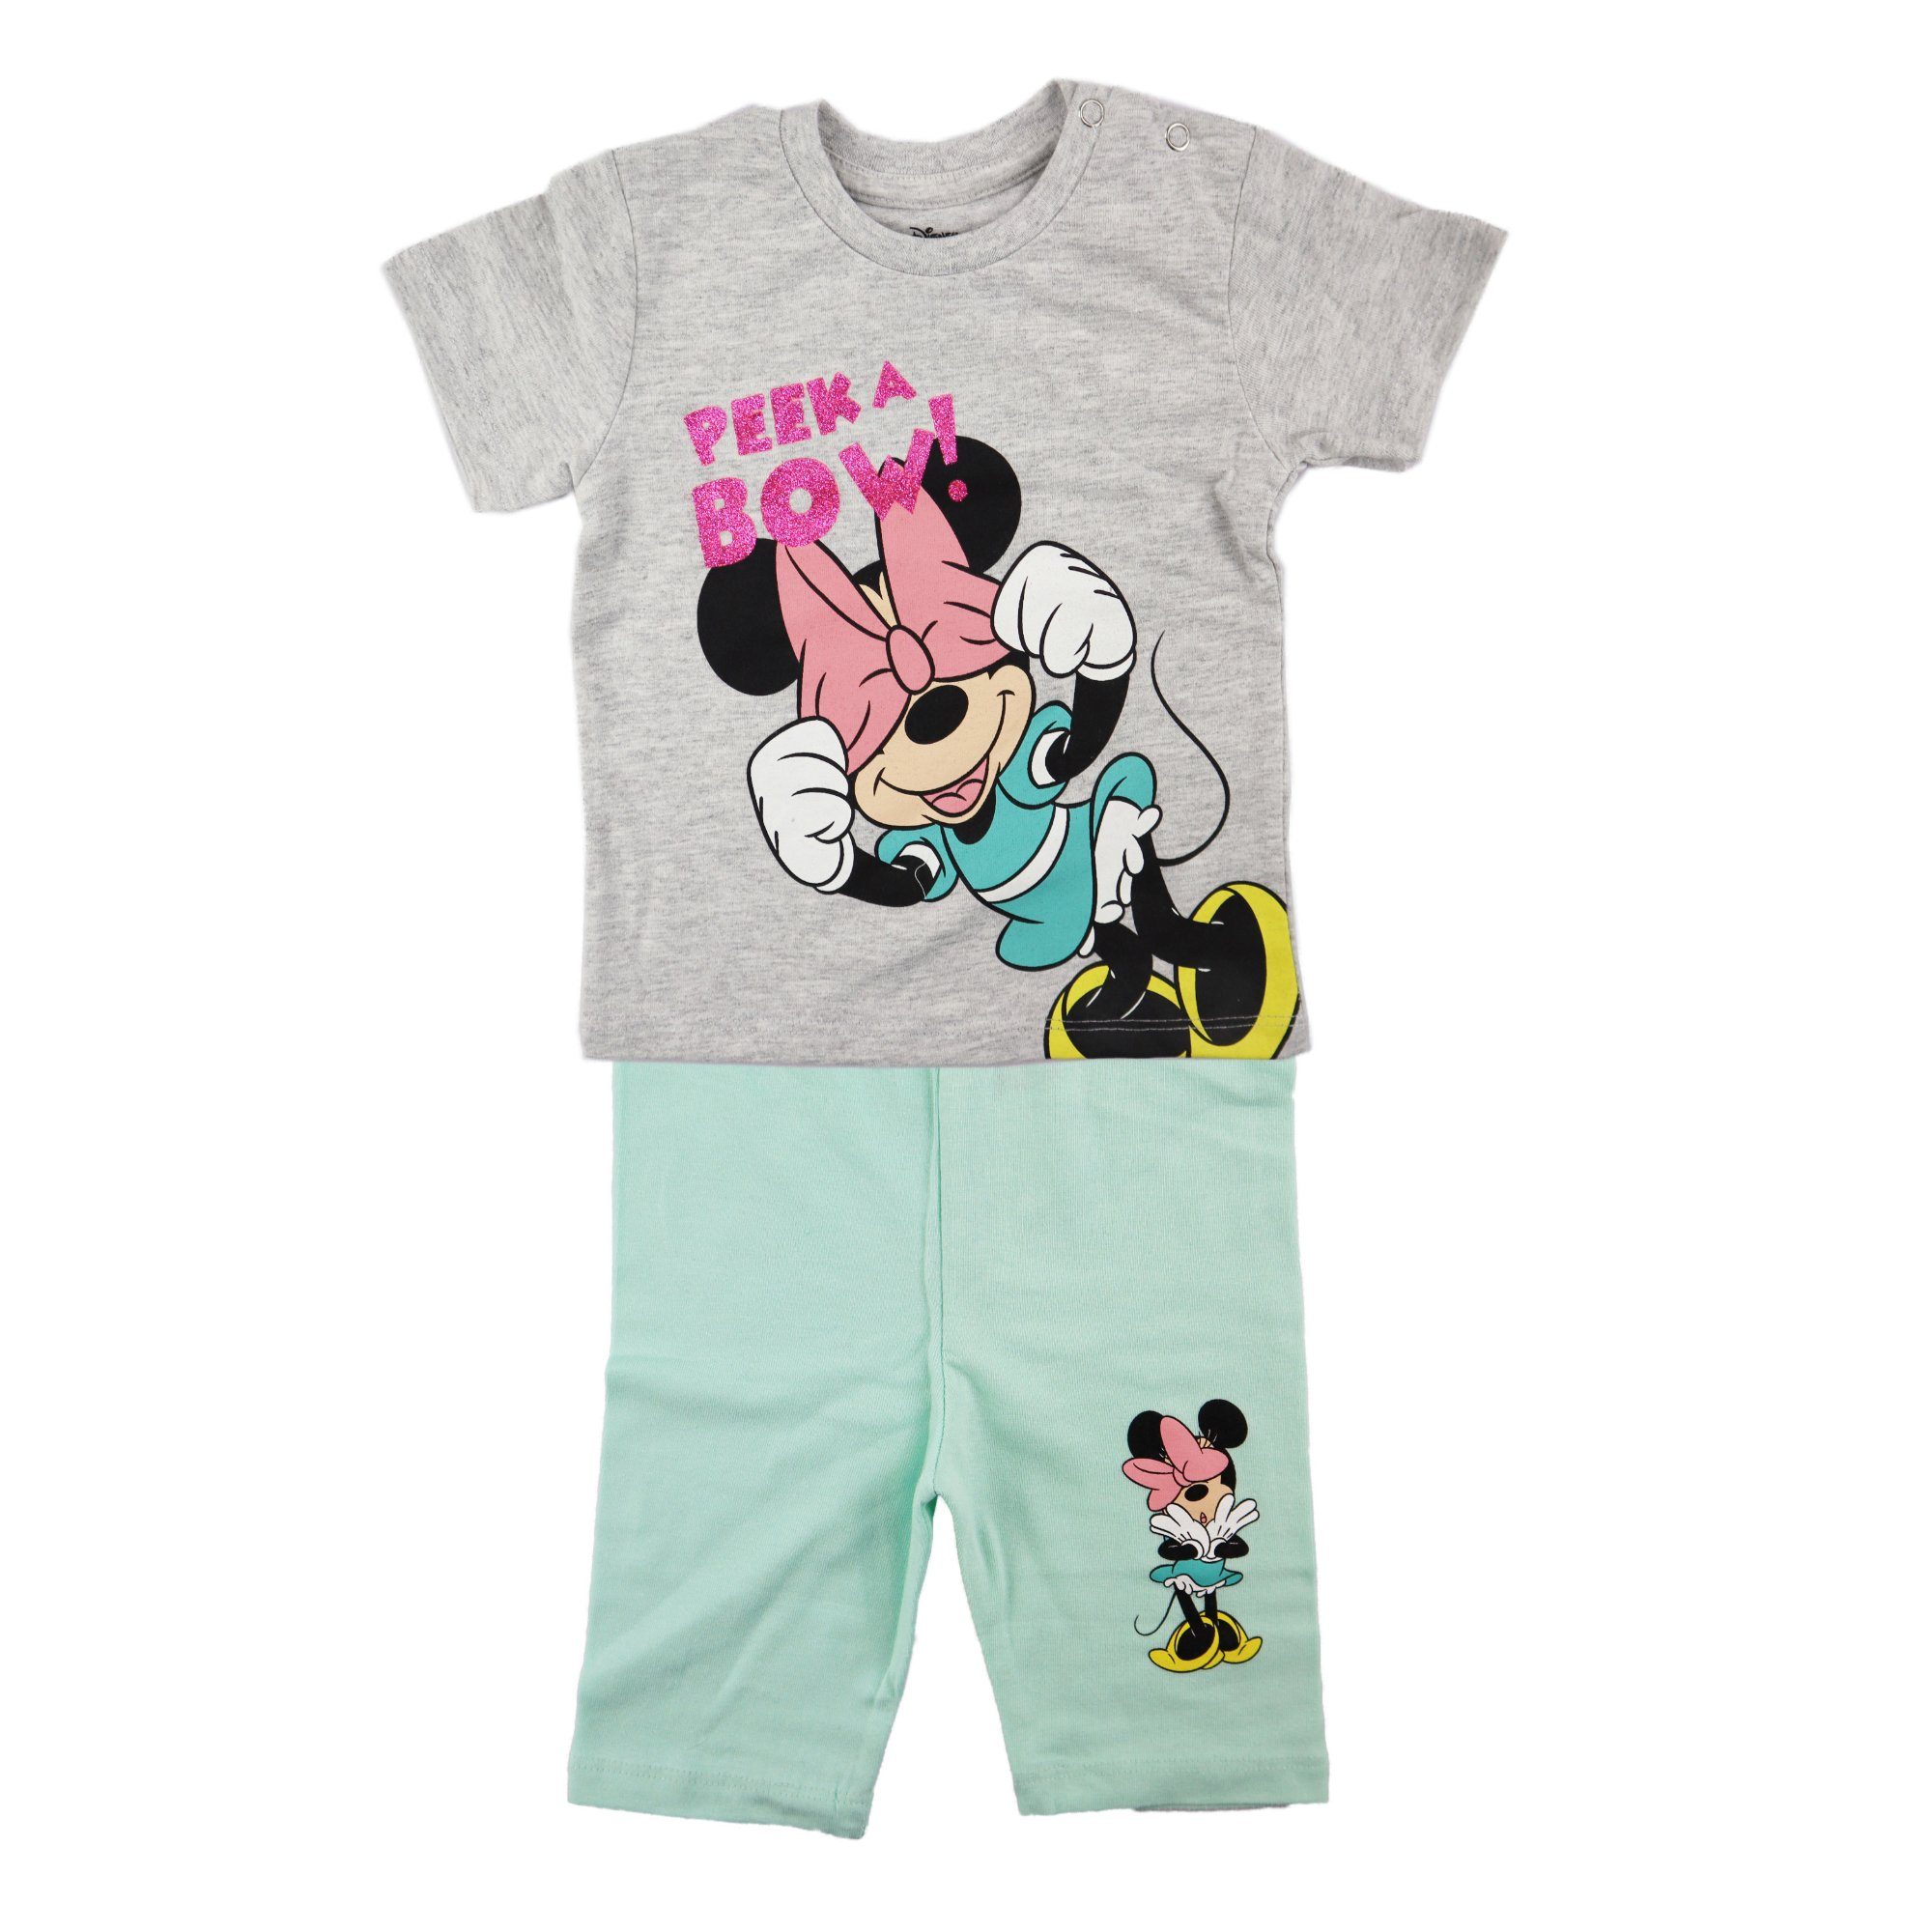 Verkaufsförderungsstrategie Disney Minnie Mouse Print-Shirt Shorts 62 Grau Gr. Maus Minnie Baby Sommerset bis 86 T-Shirt plus Mädchen